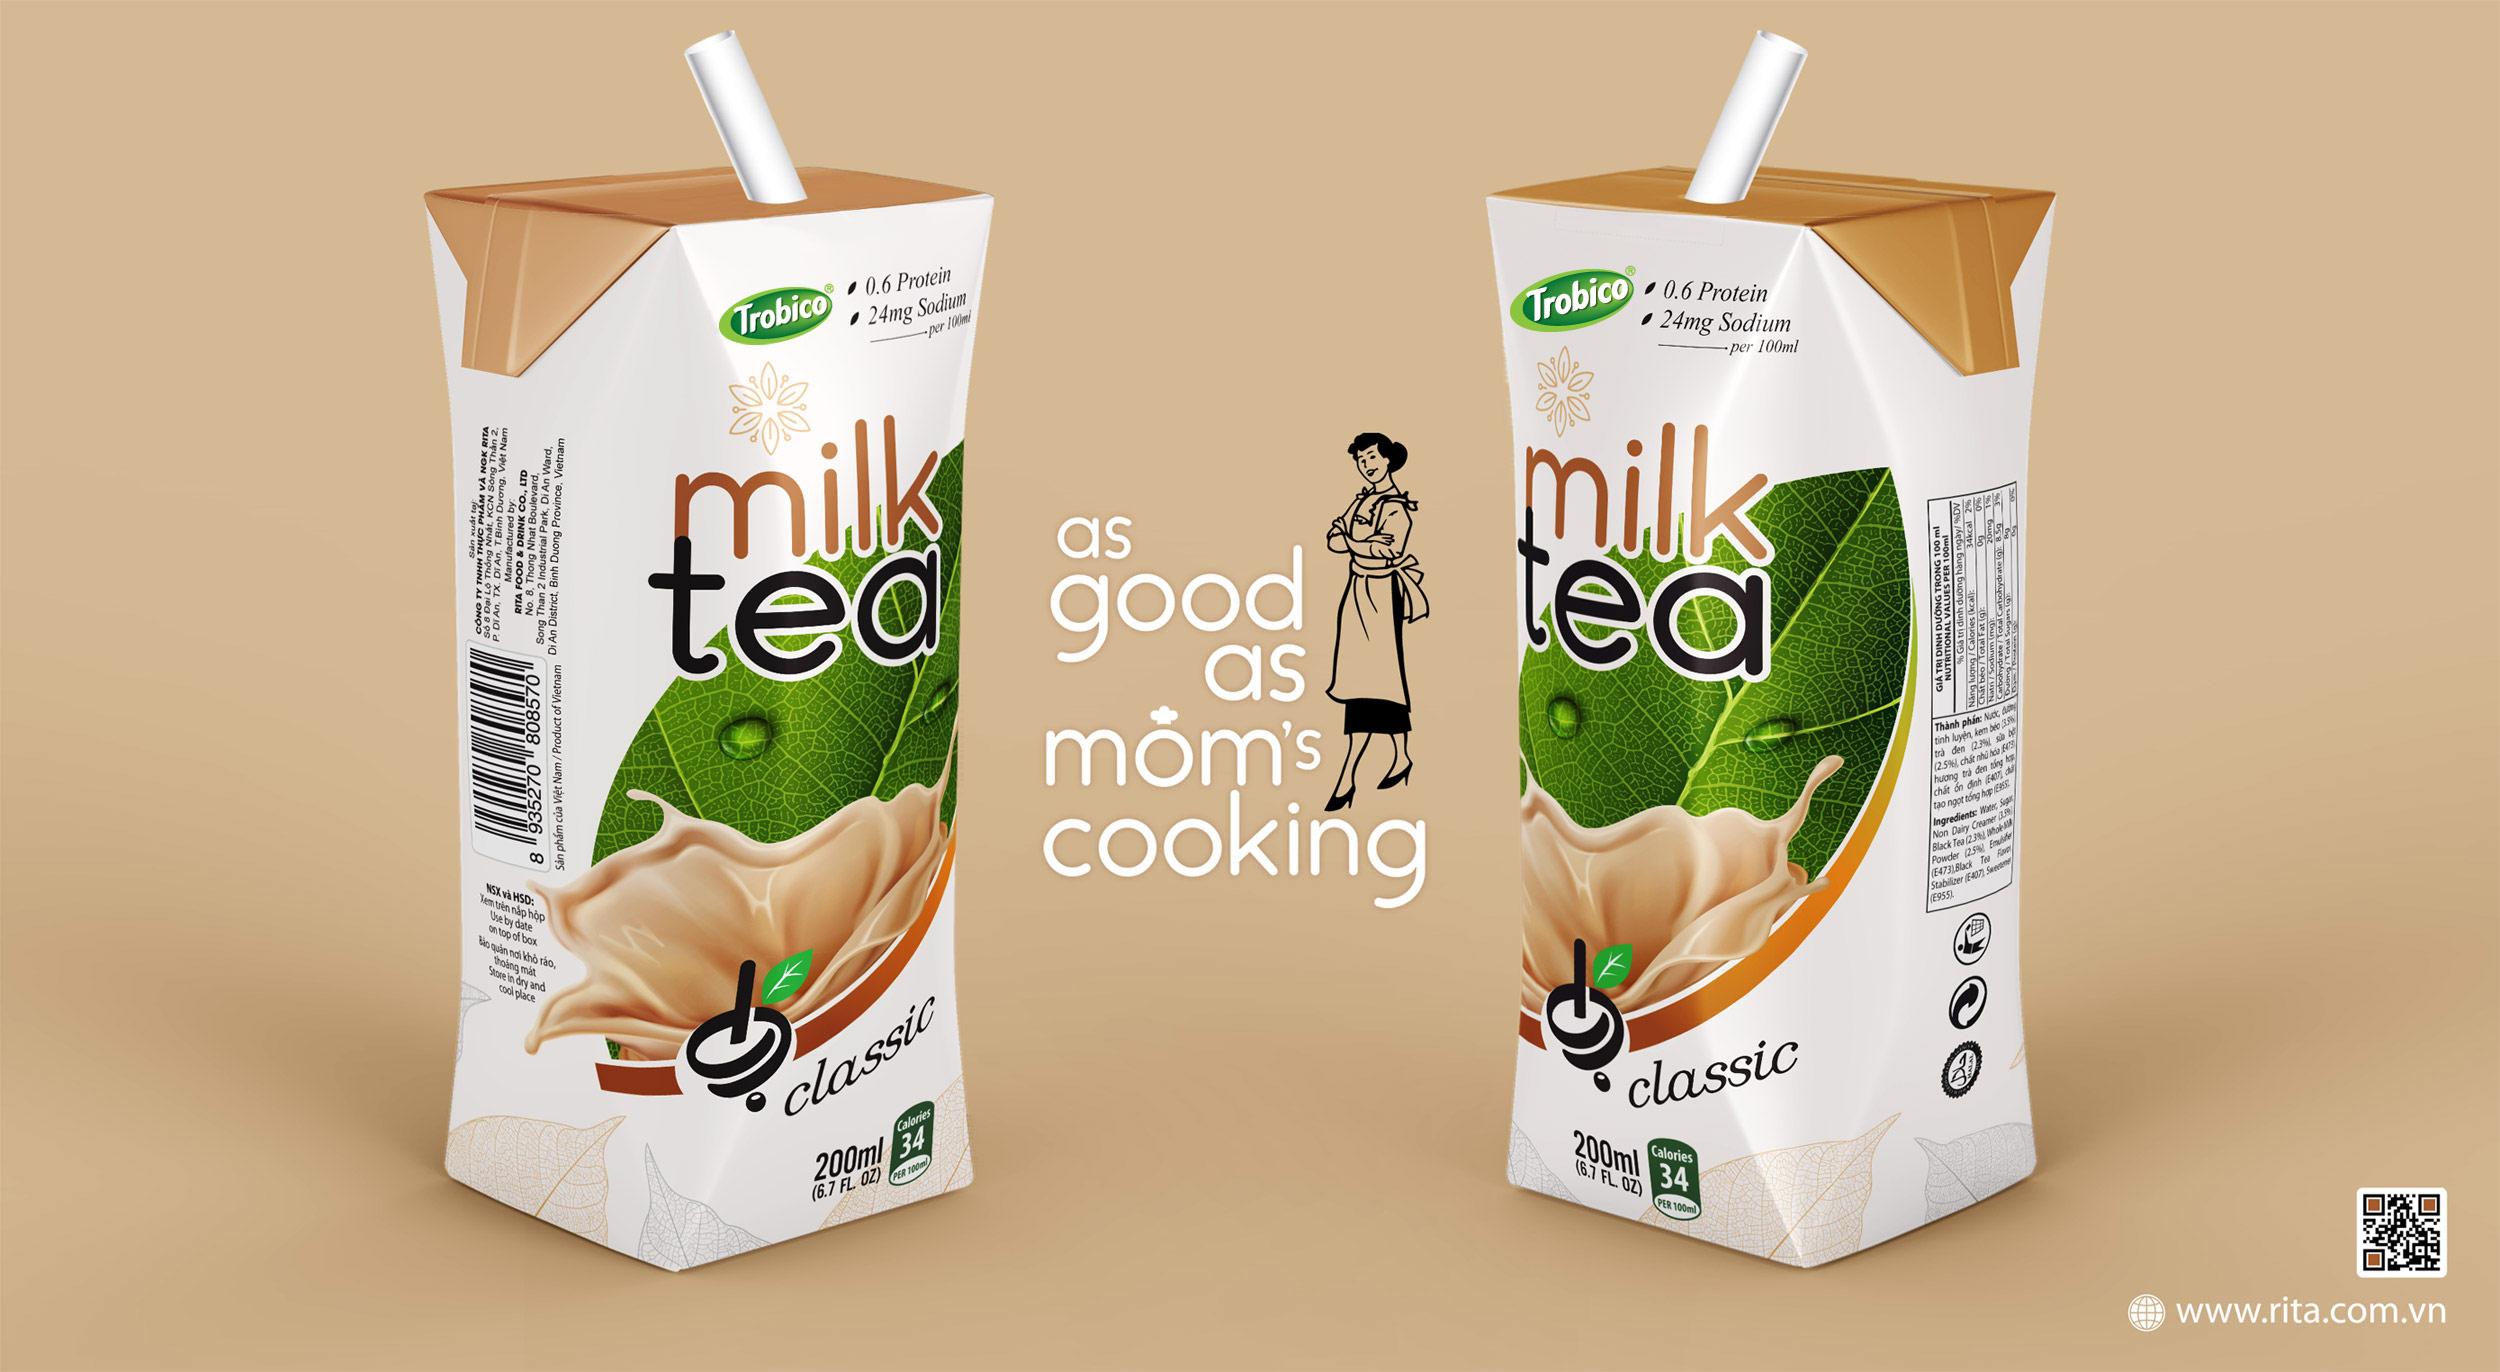 Trobico Milk Tea 200ml Aseptic pak Poster